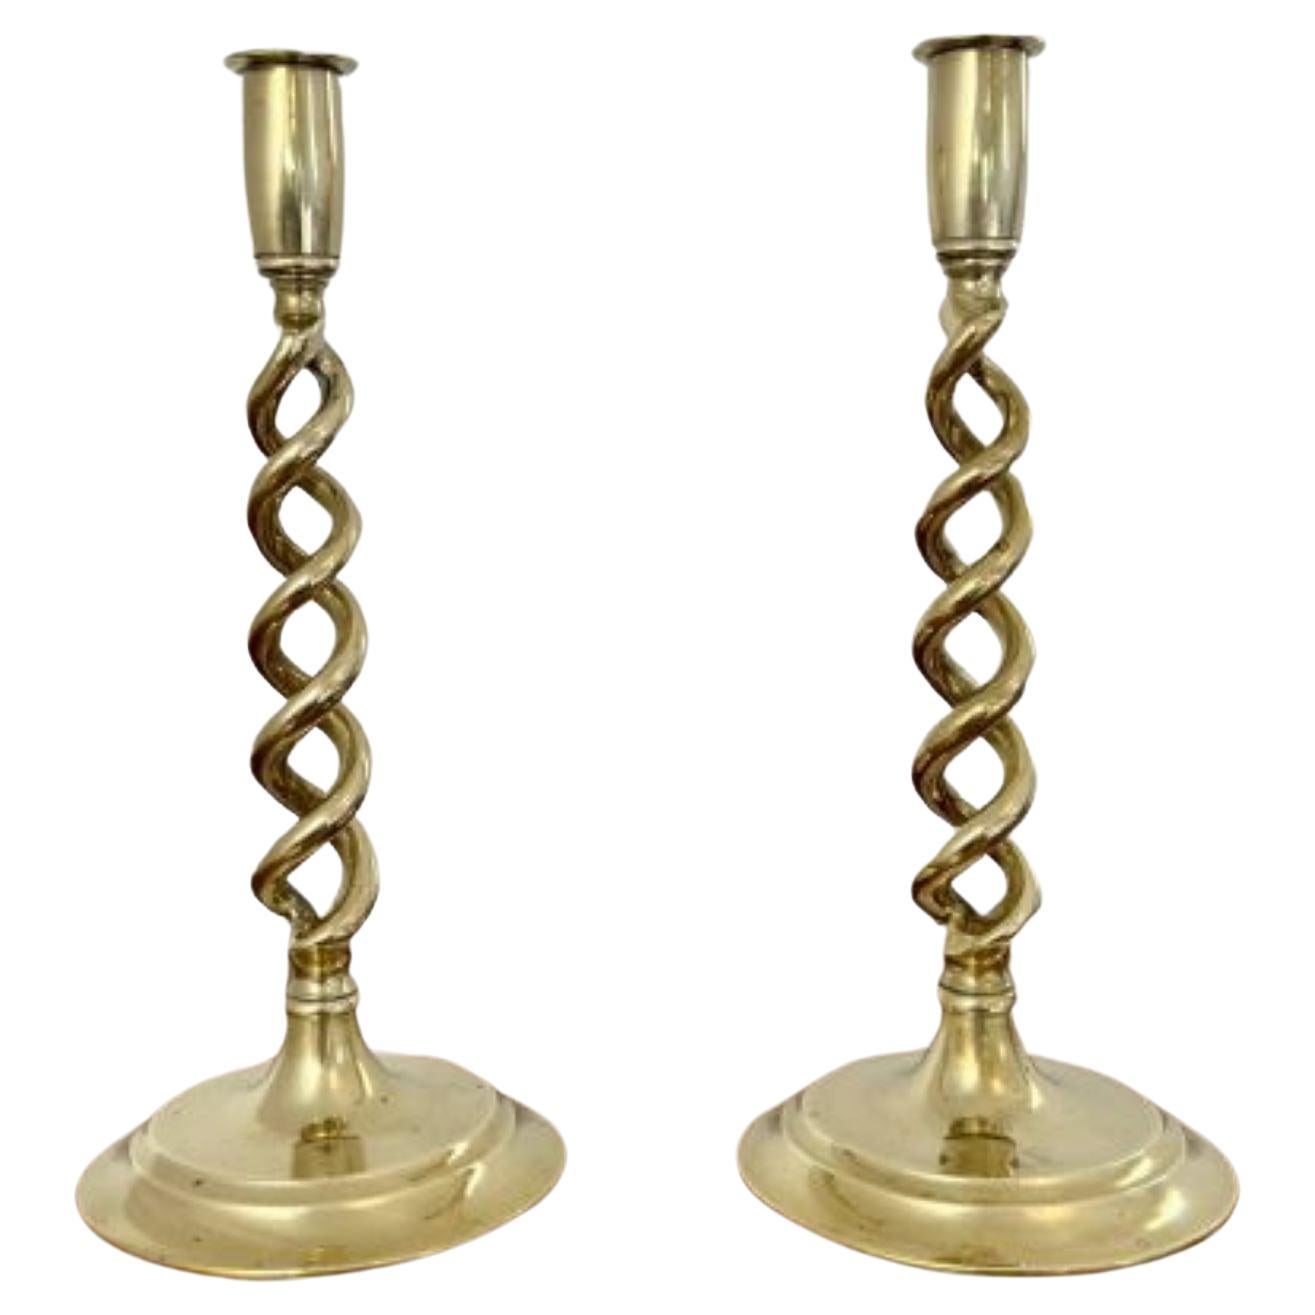 Fantastic quality antique Edwardian brass candlesticks 